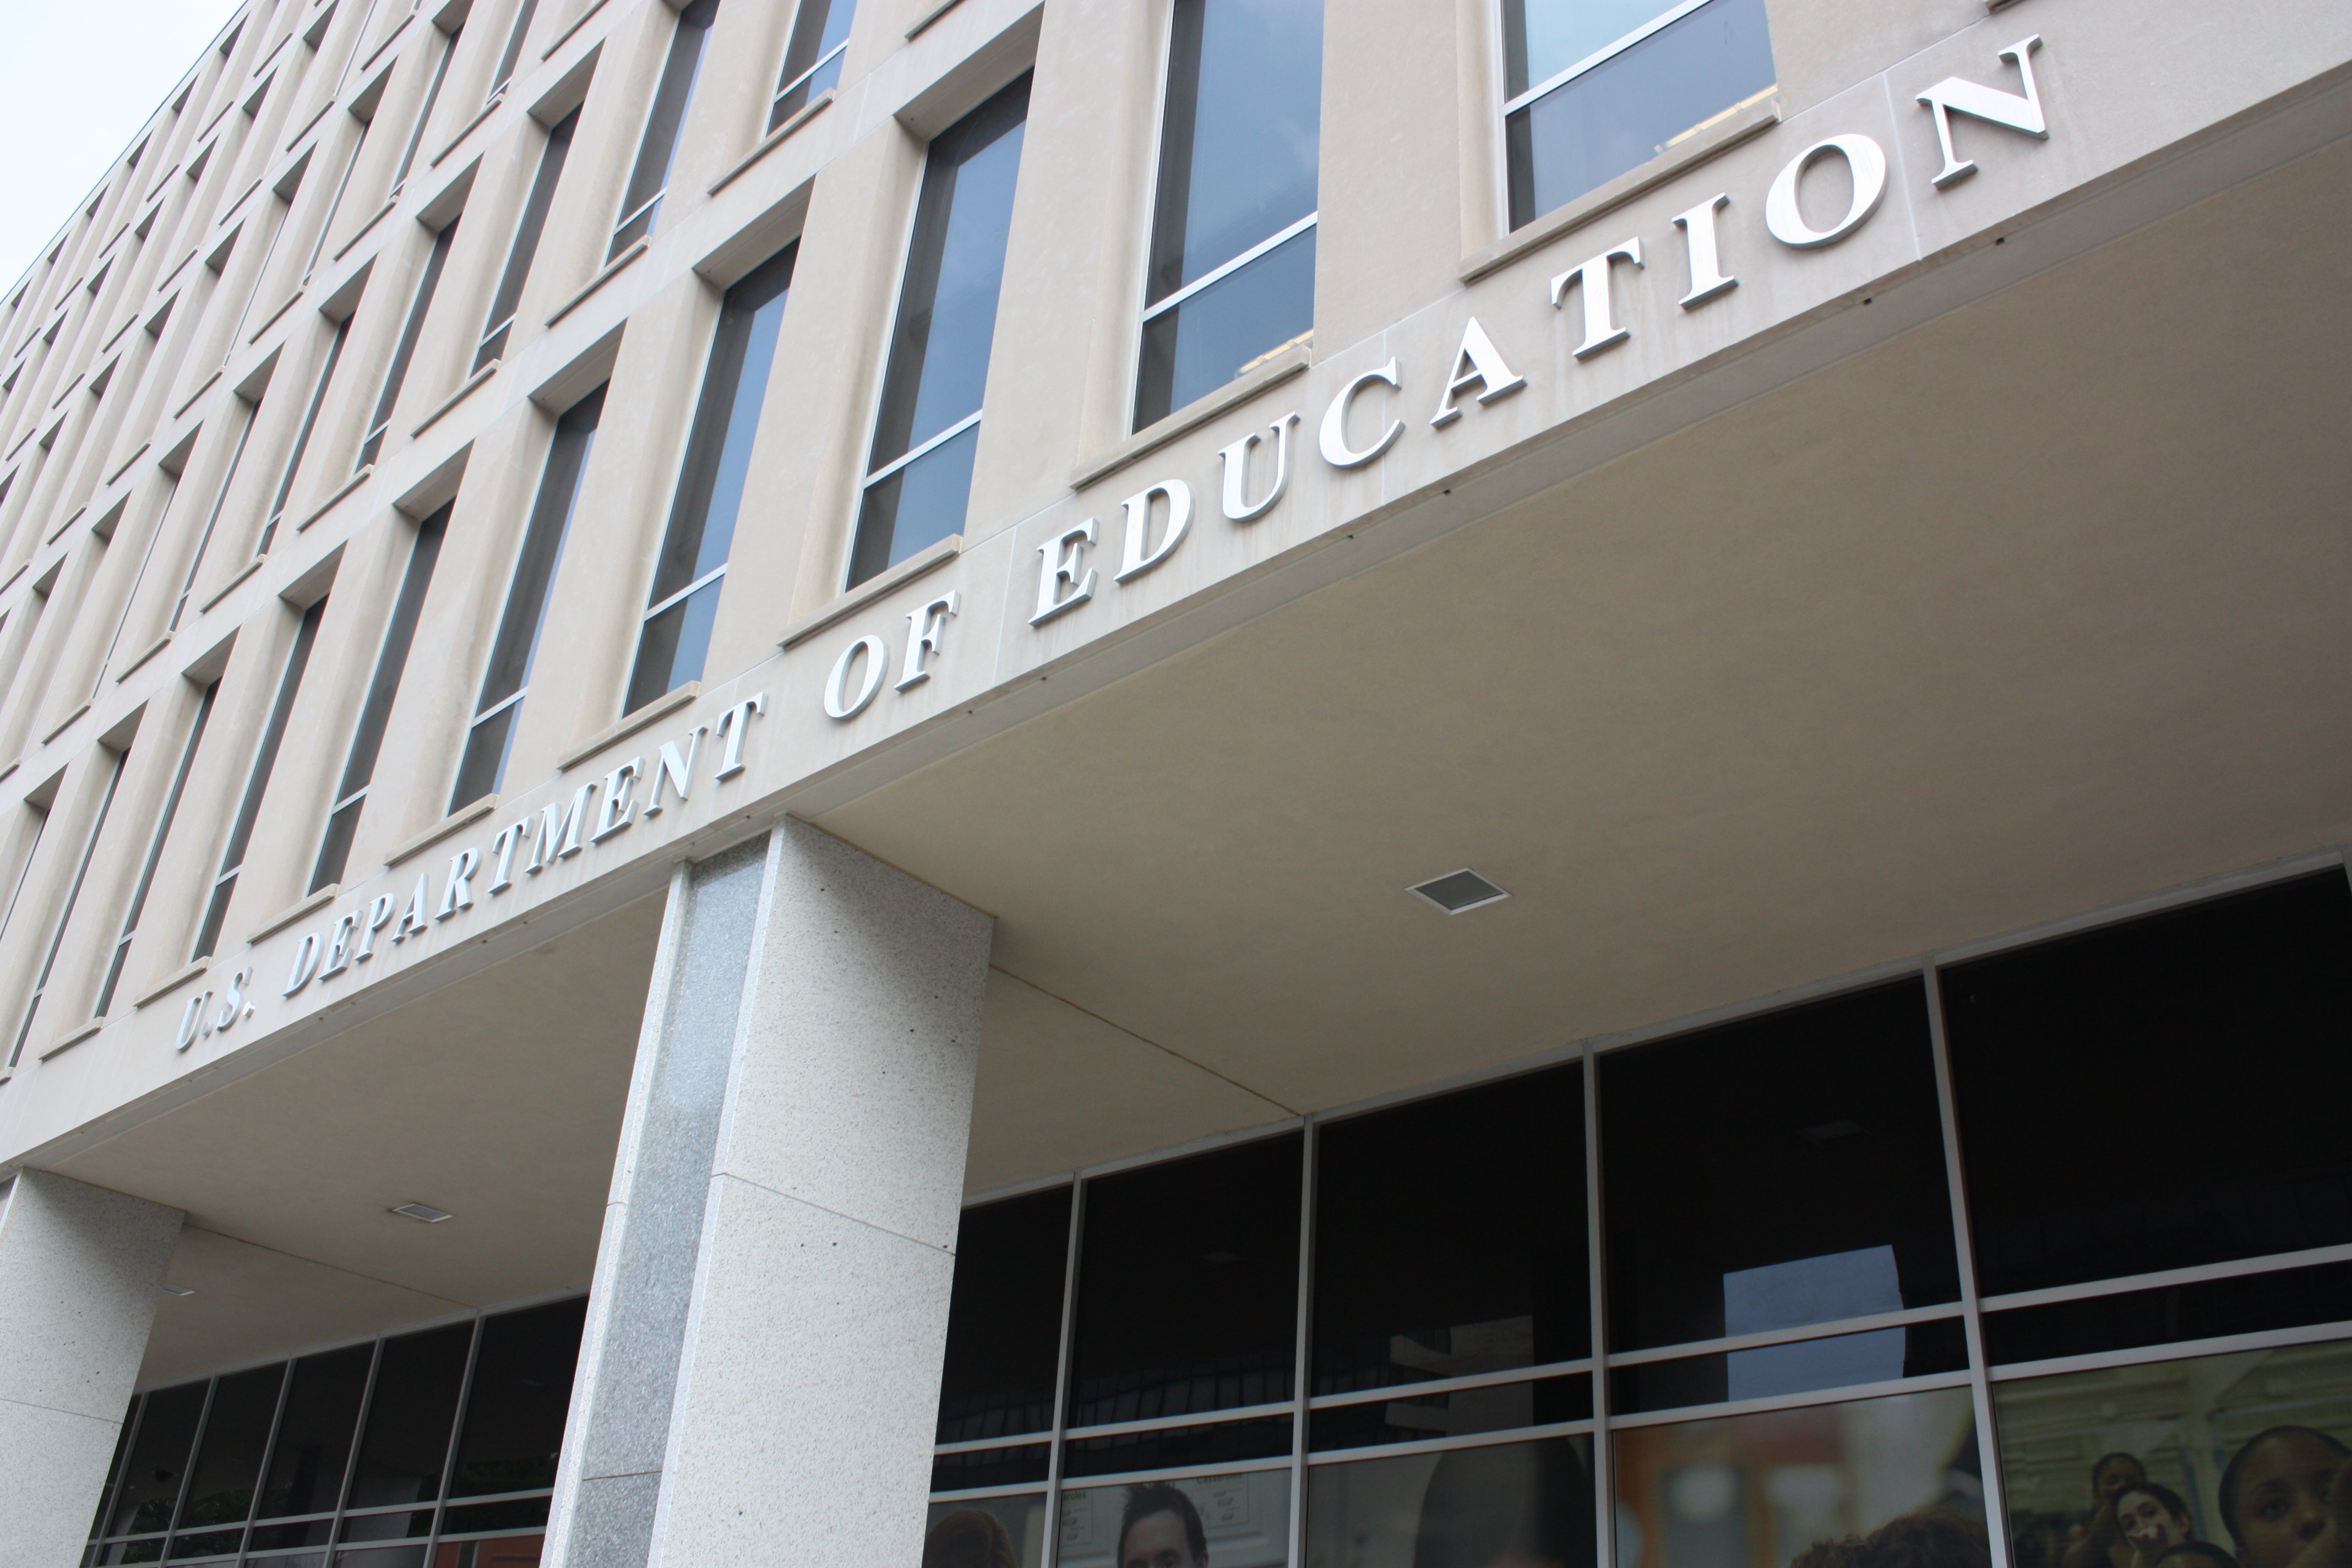 US Department of Education Headquarters in Washington, D.C.